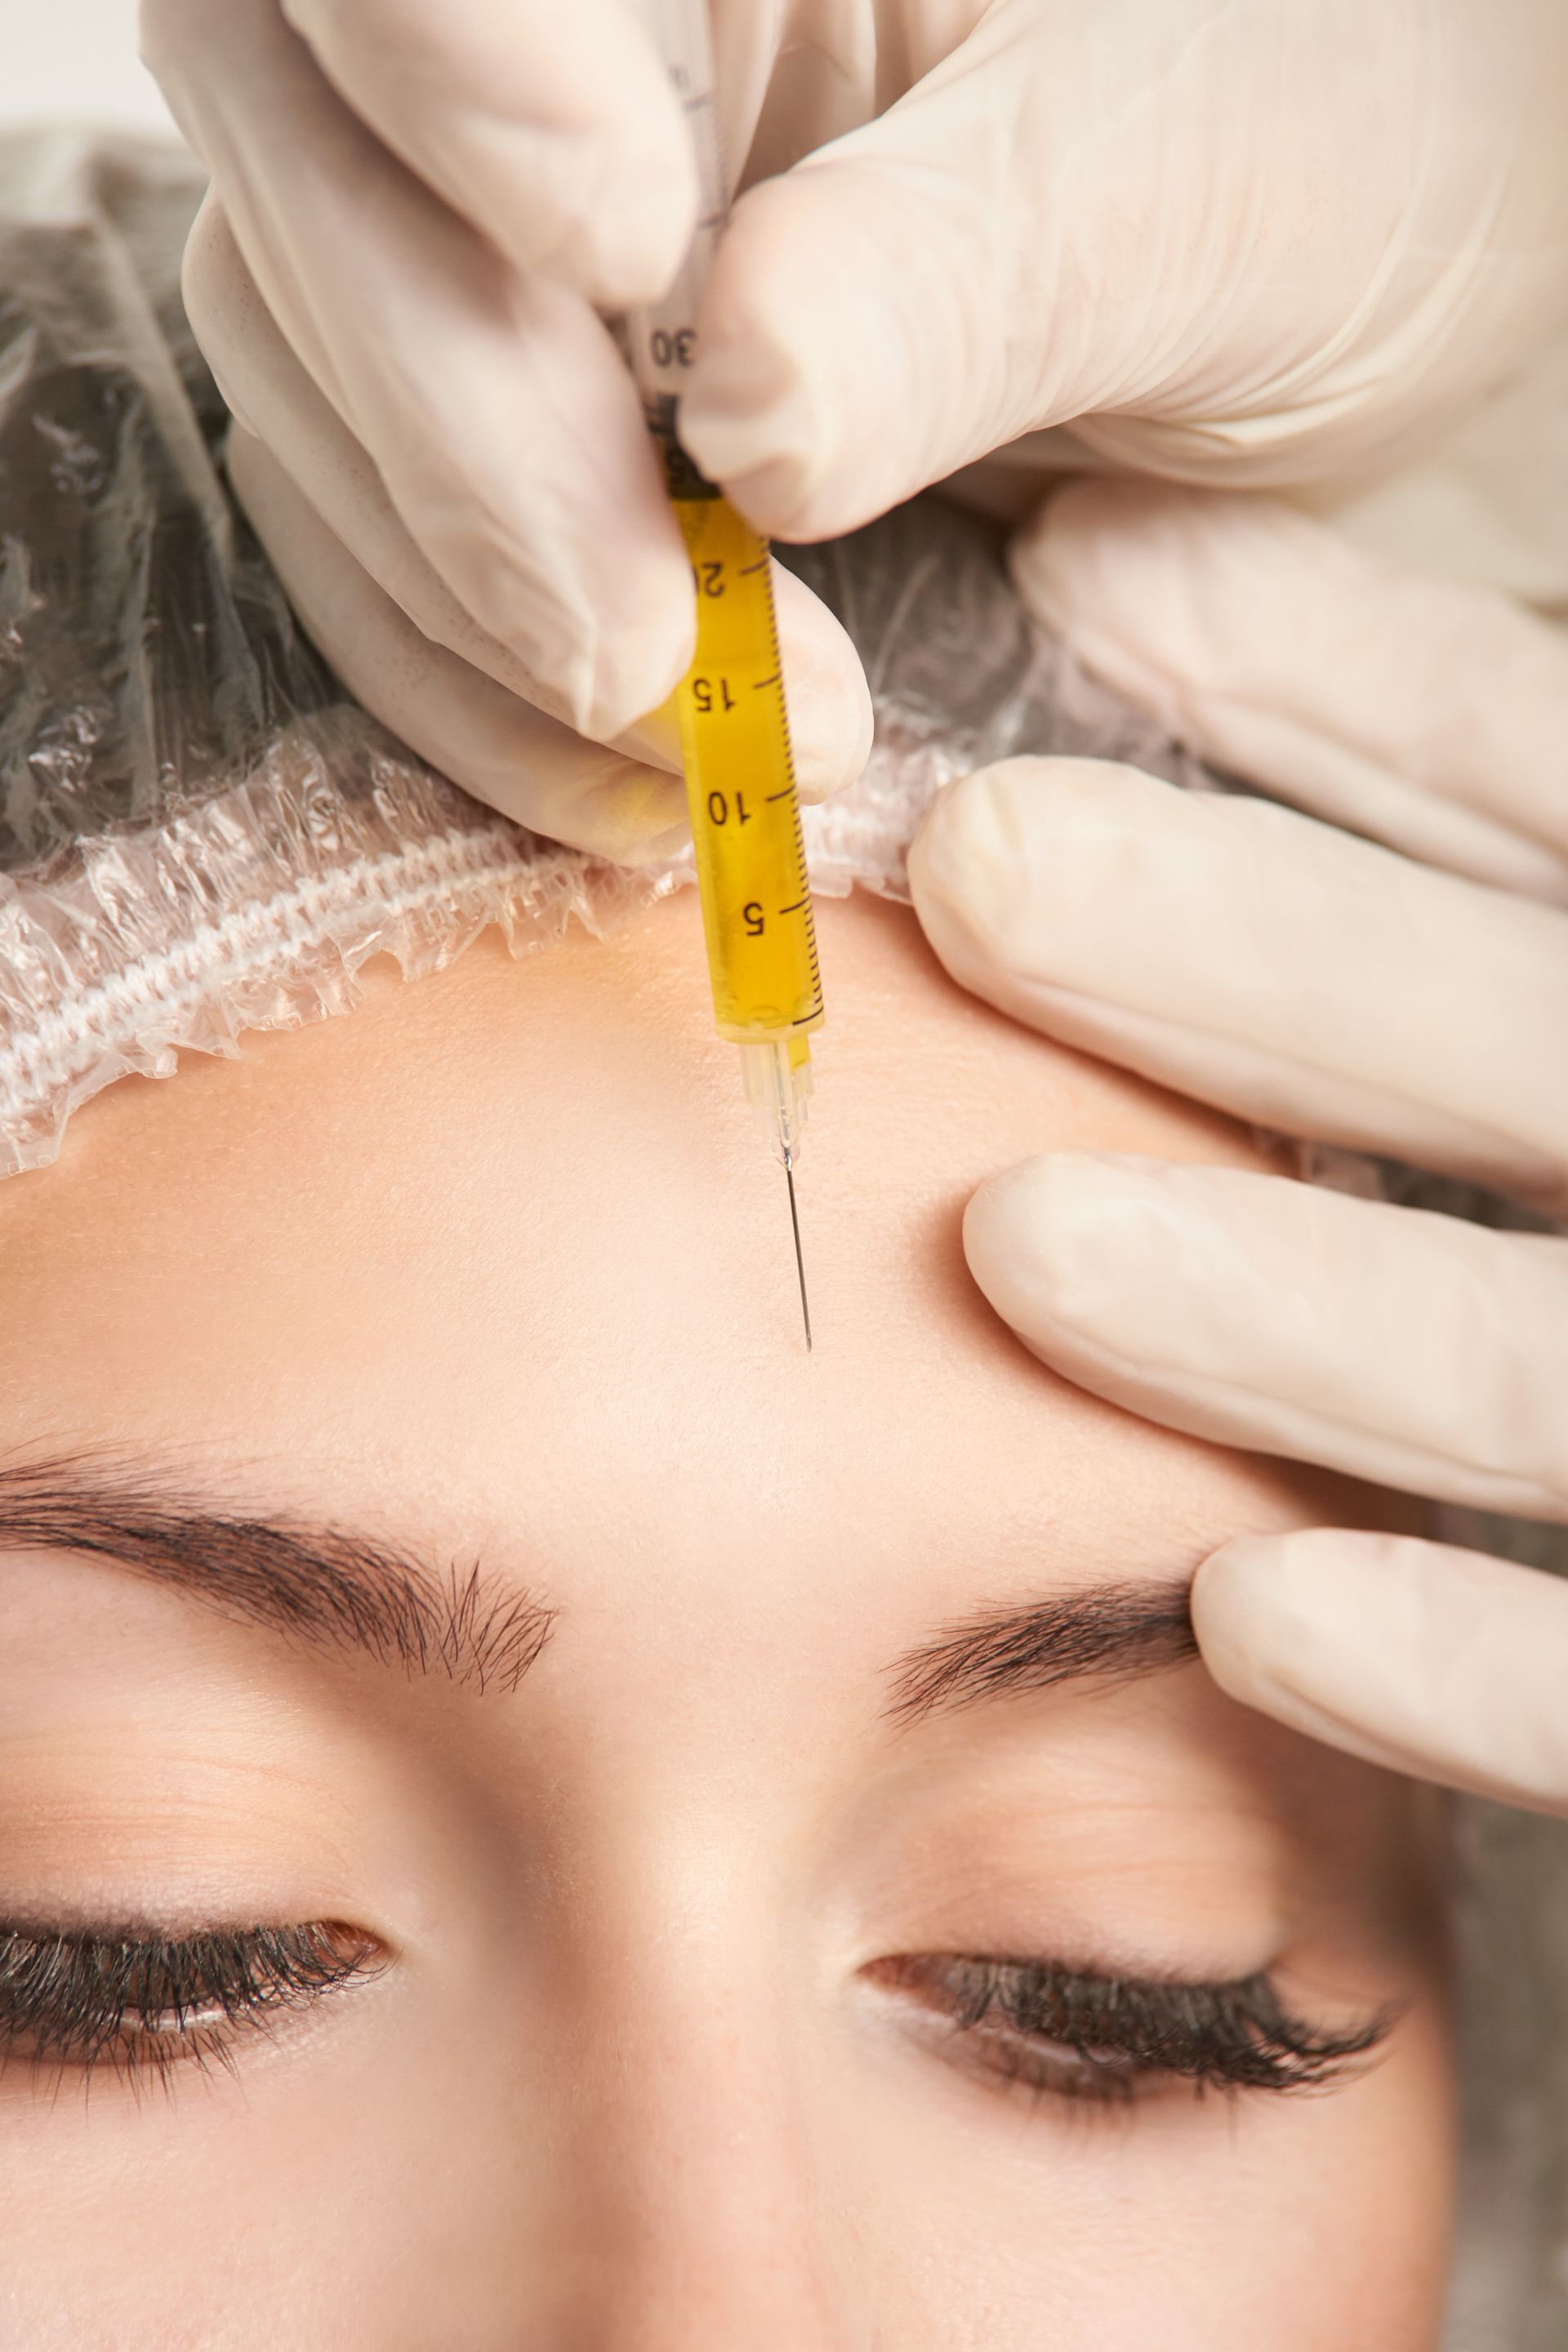 woman receives facial skin rejuvenation treatment